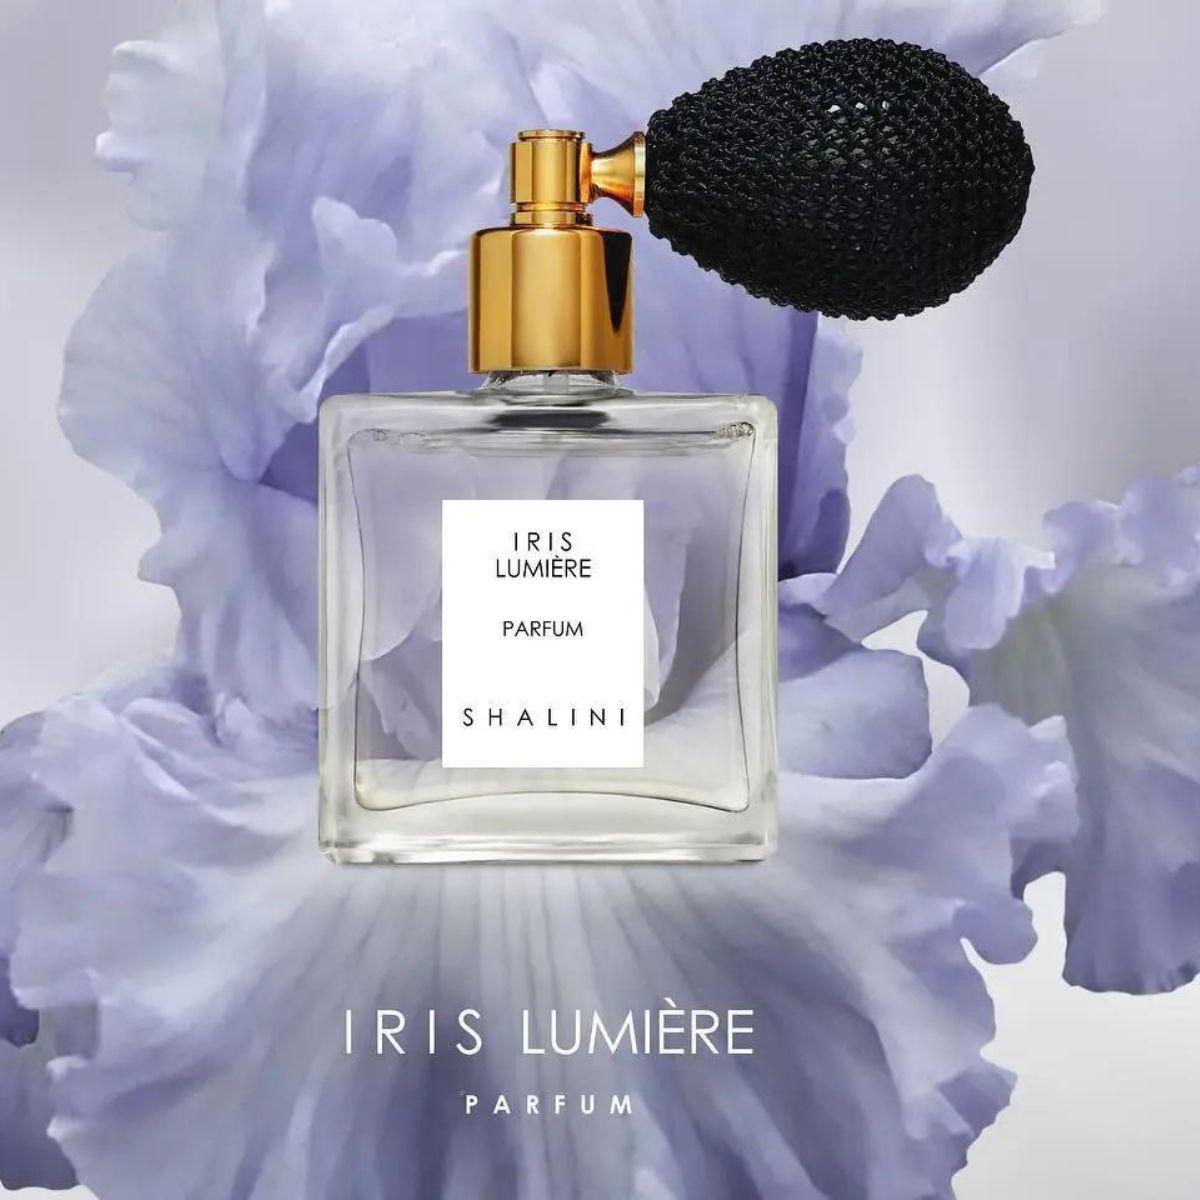 Image of Iris Lumiere bulb atomizer by the perfume brand Shalini